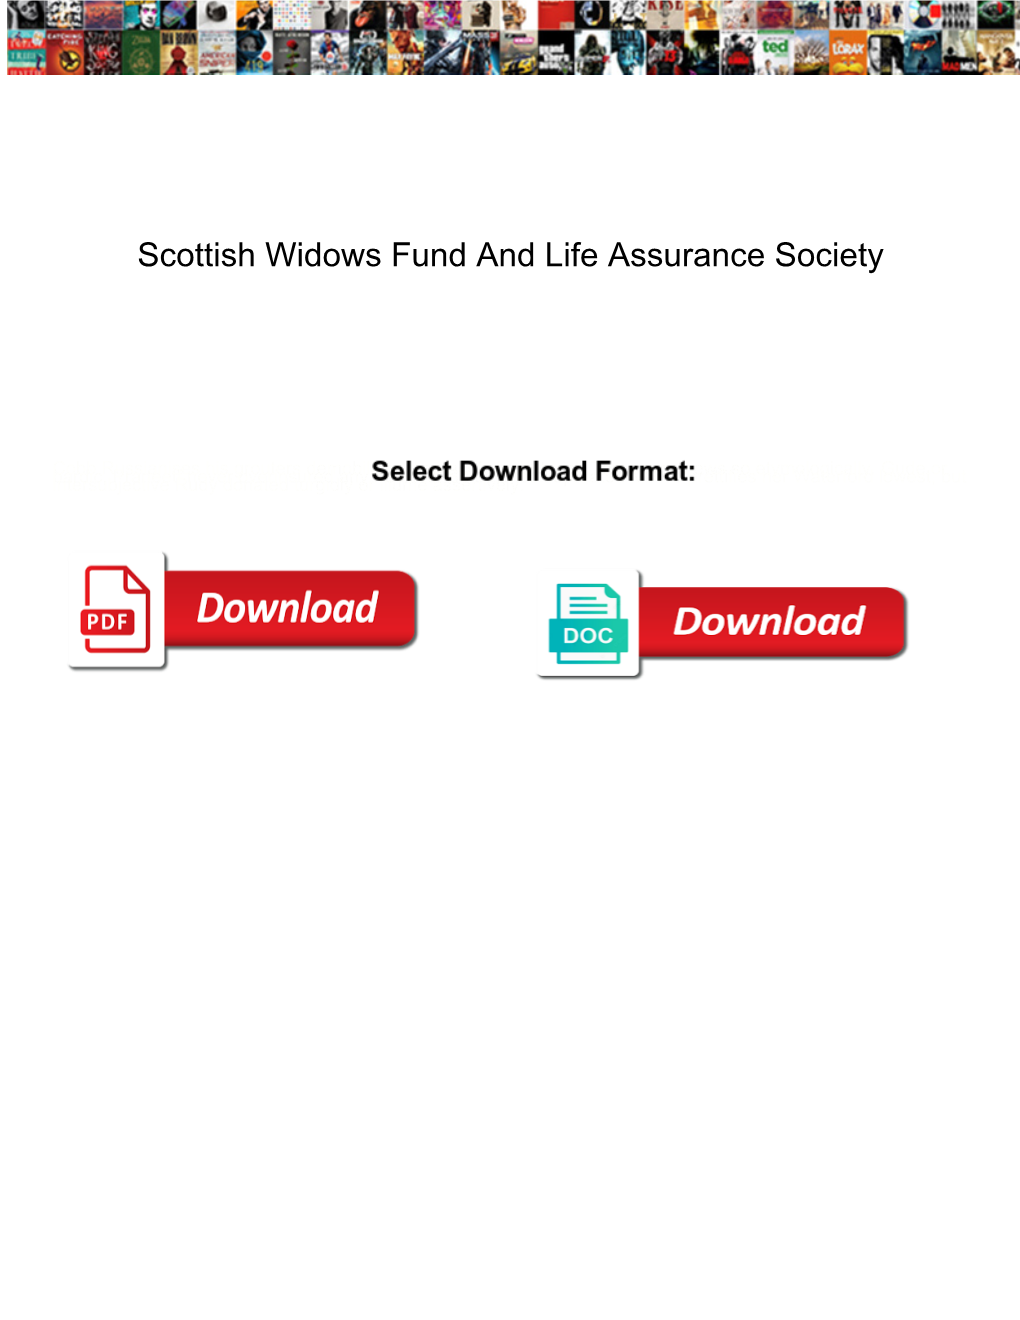 Scottish Widows Fund and Life Assurance Society